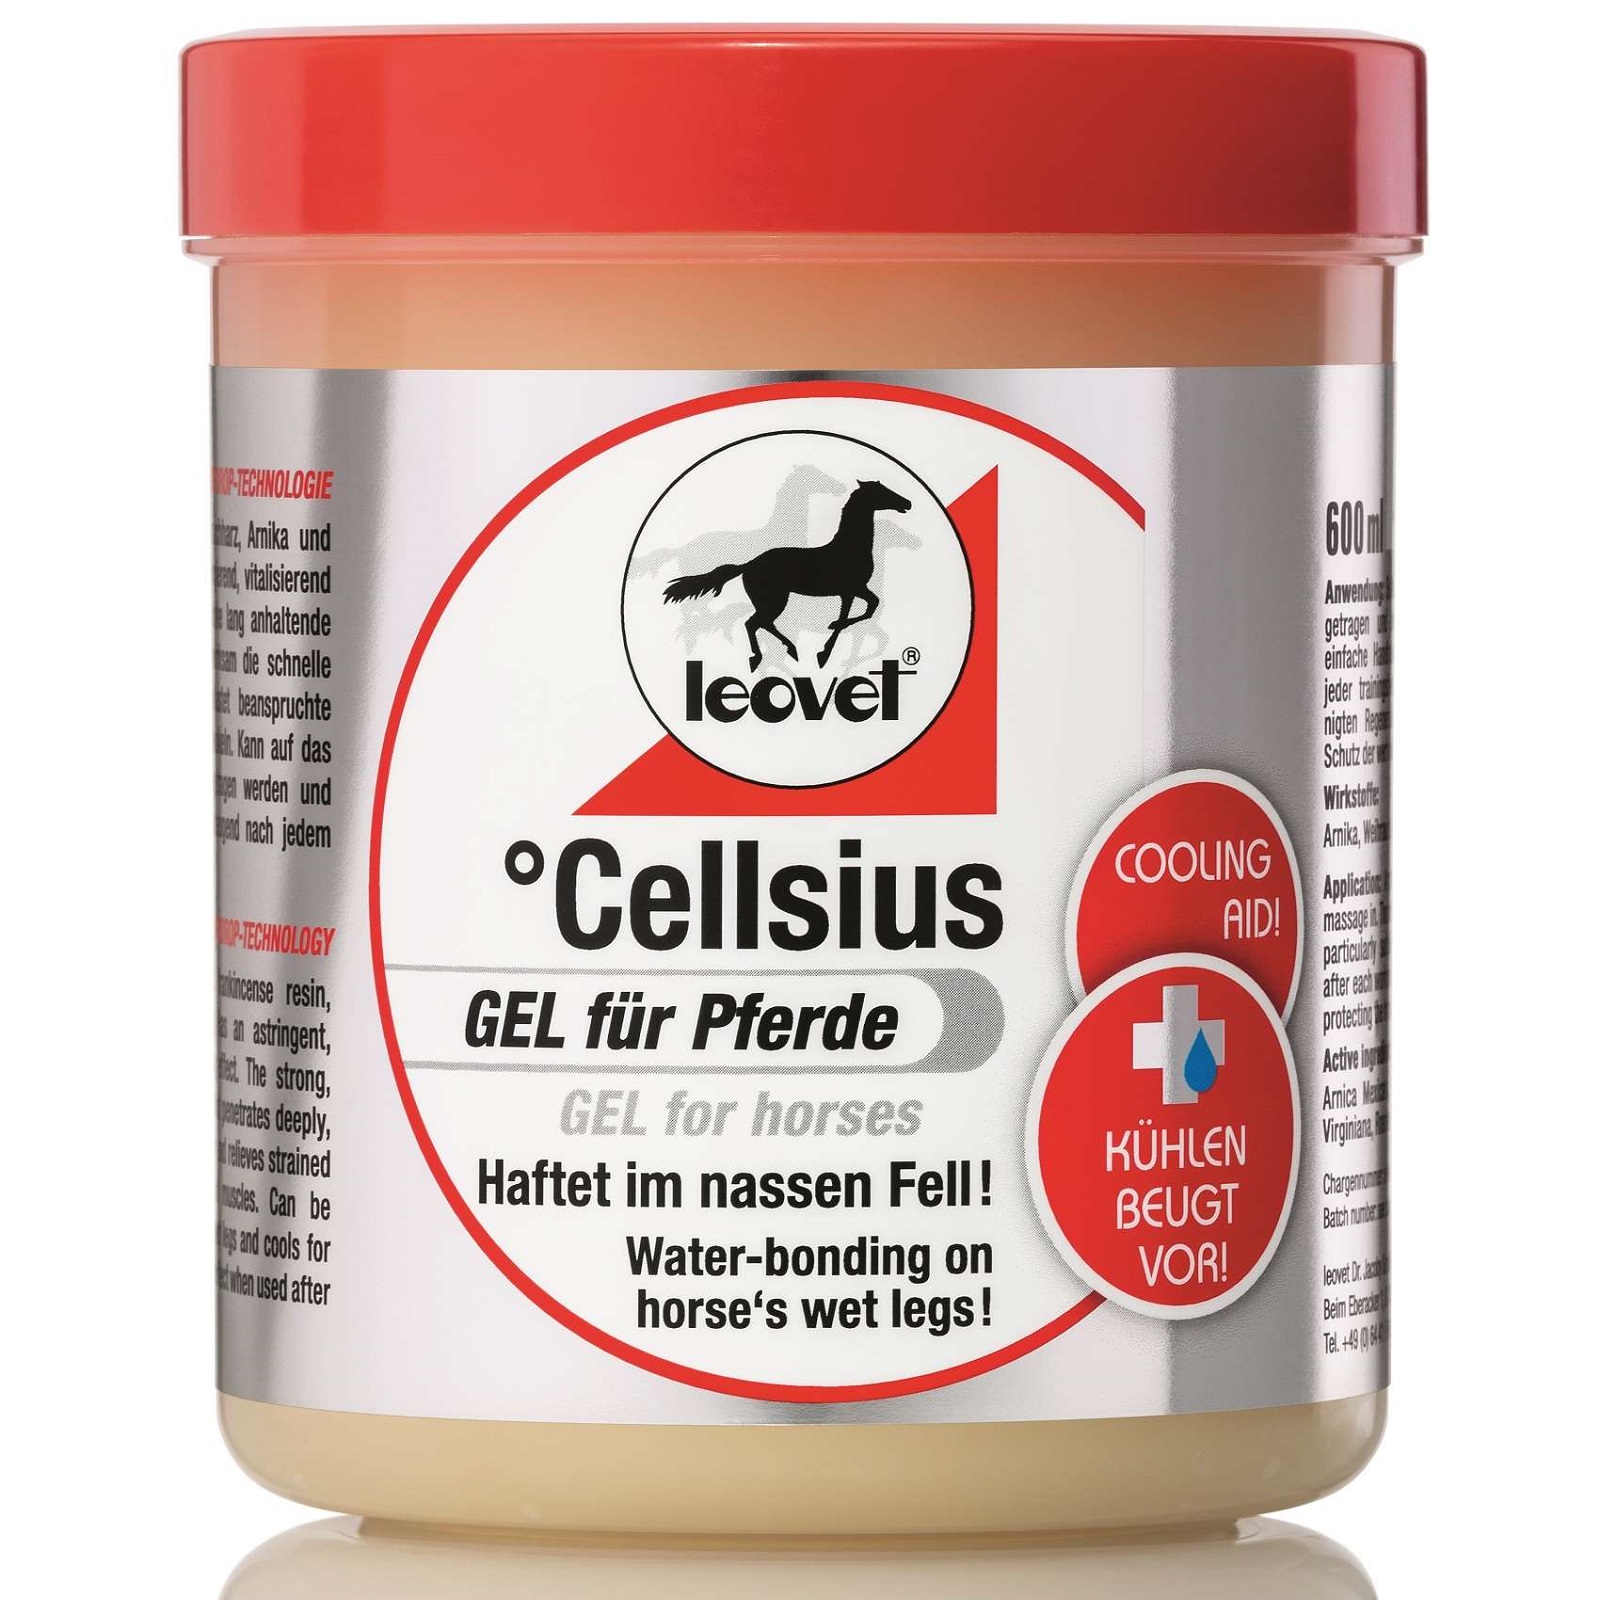 Leovet Cellsius gel răcoritor pentru cai 600 ml